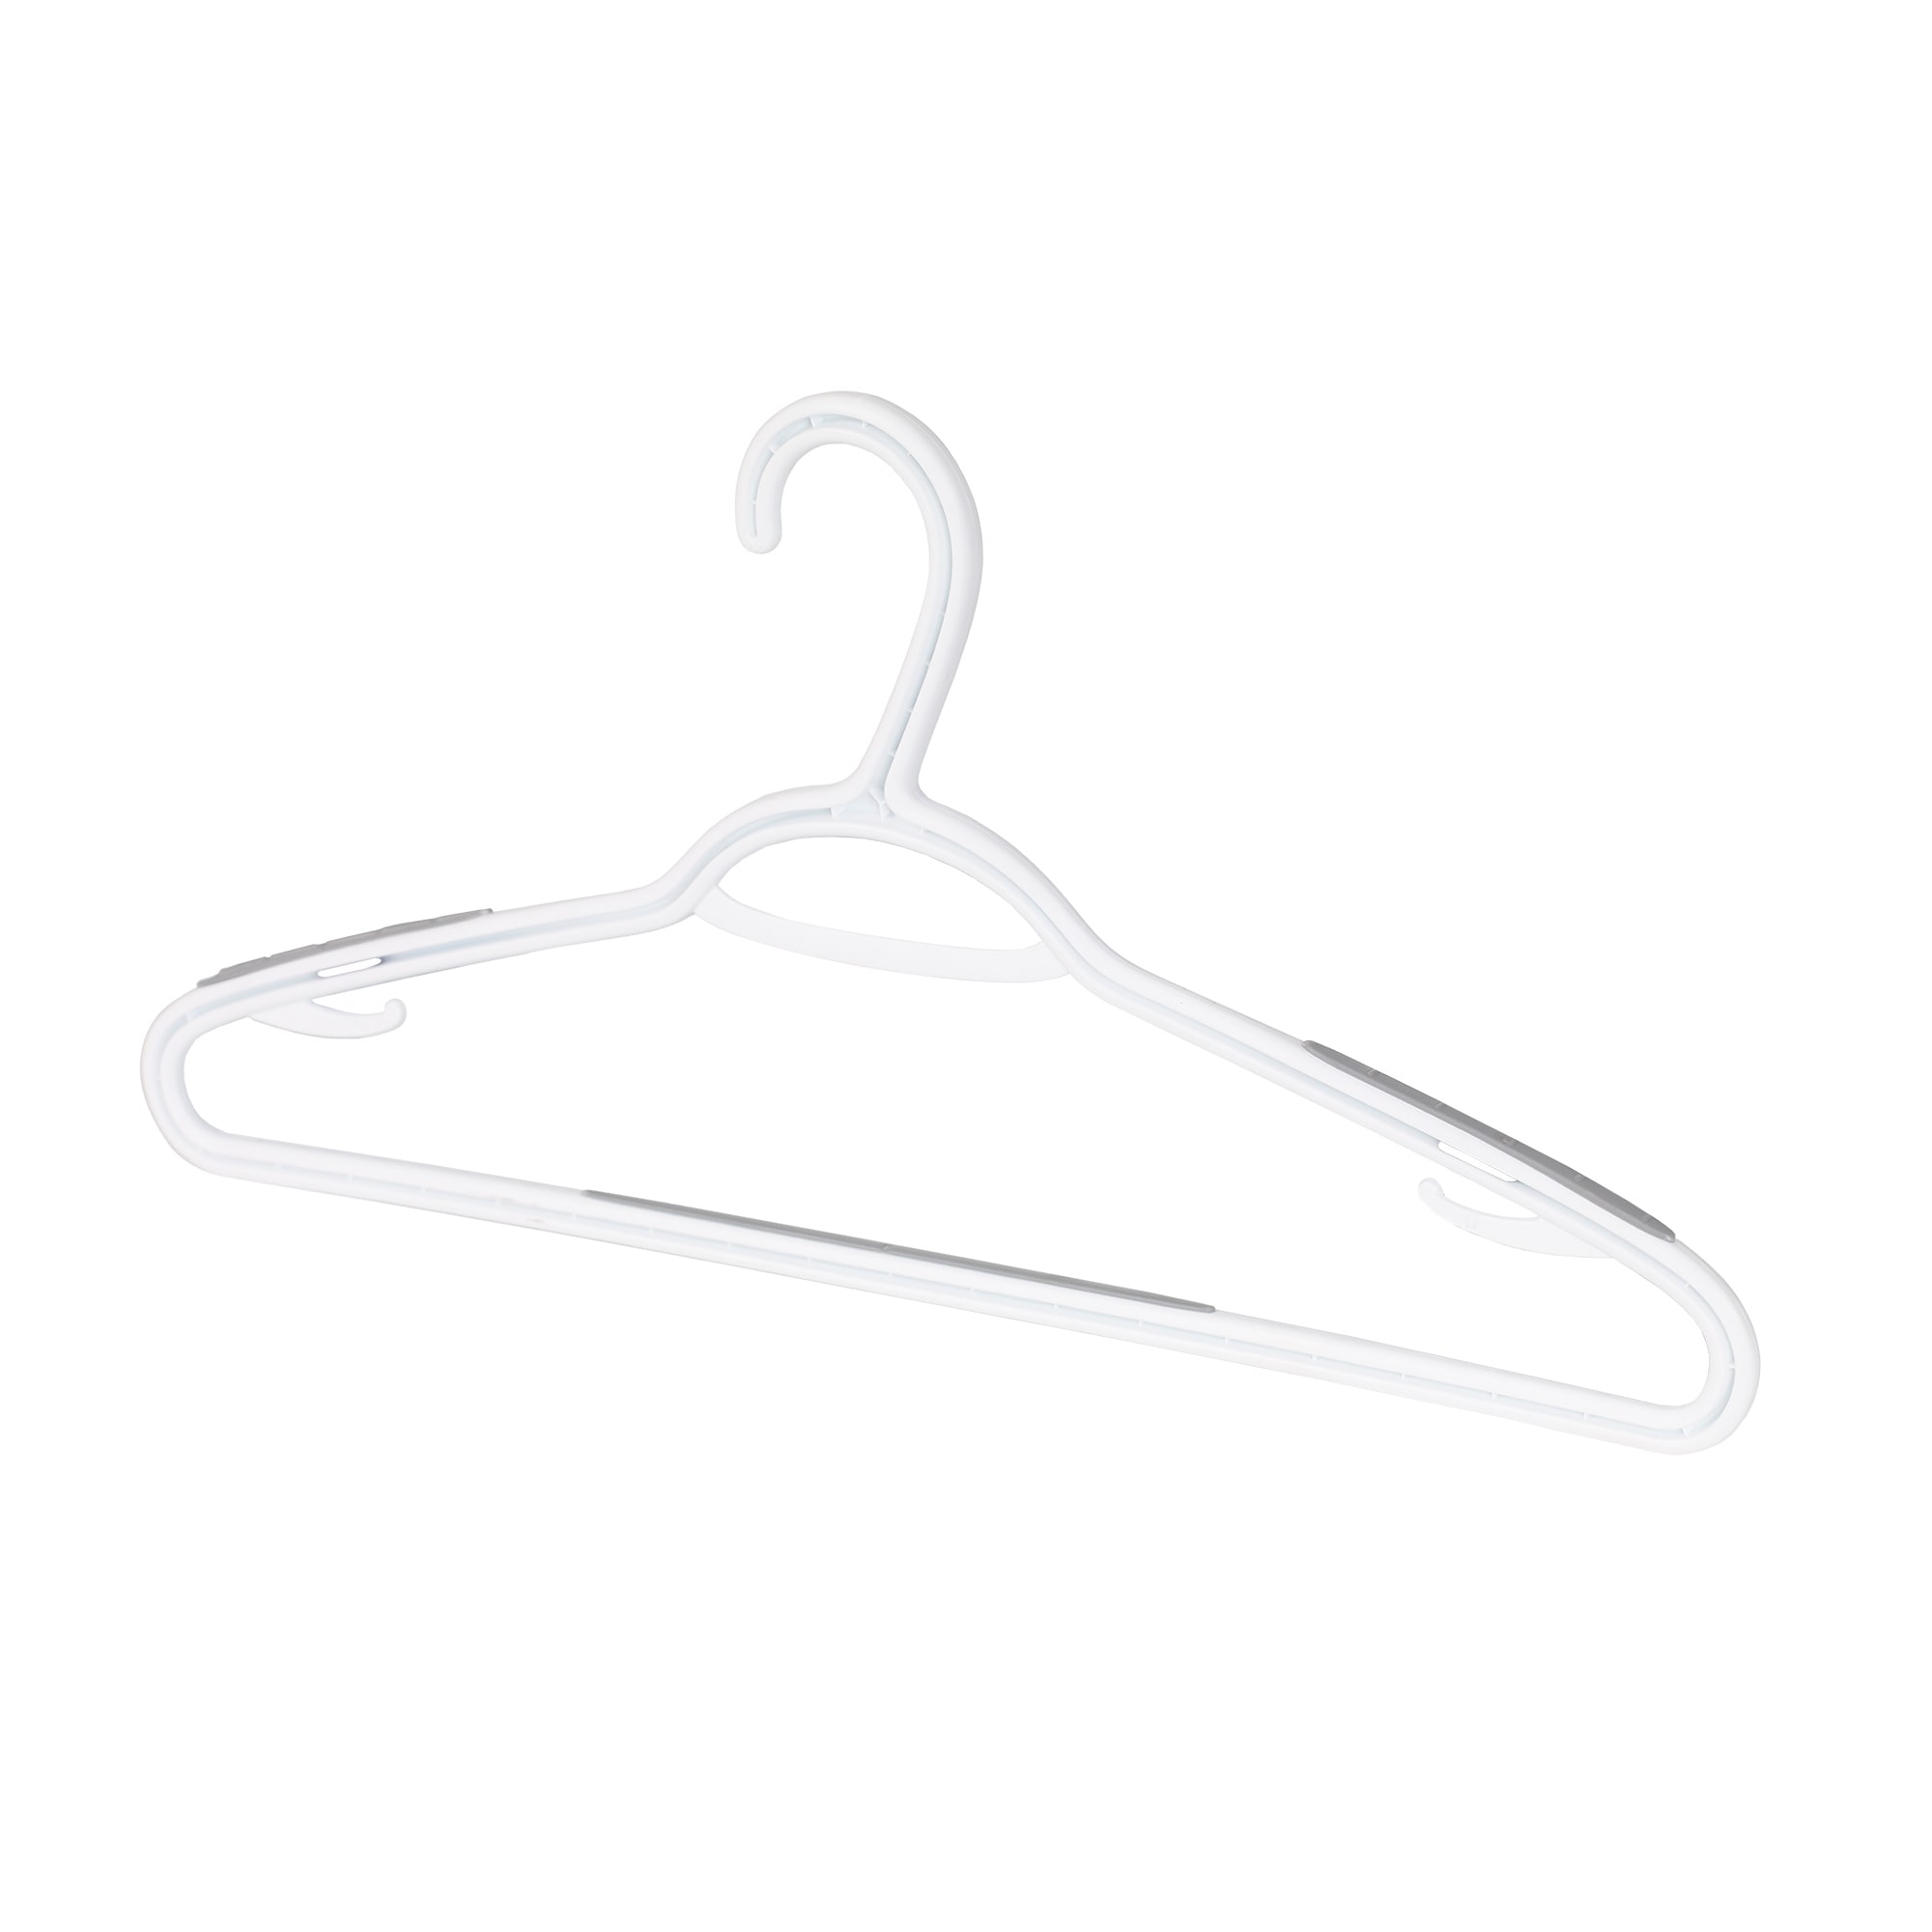 1set/10pcs Plastic Clothes Hangers, Anti-slip, Multi-functional Hangers  With Hanging Girdles Design, Large Size For Wardrobe Storage